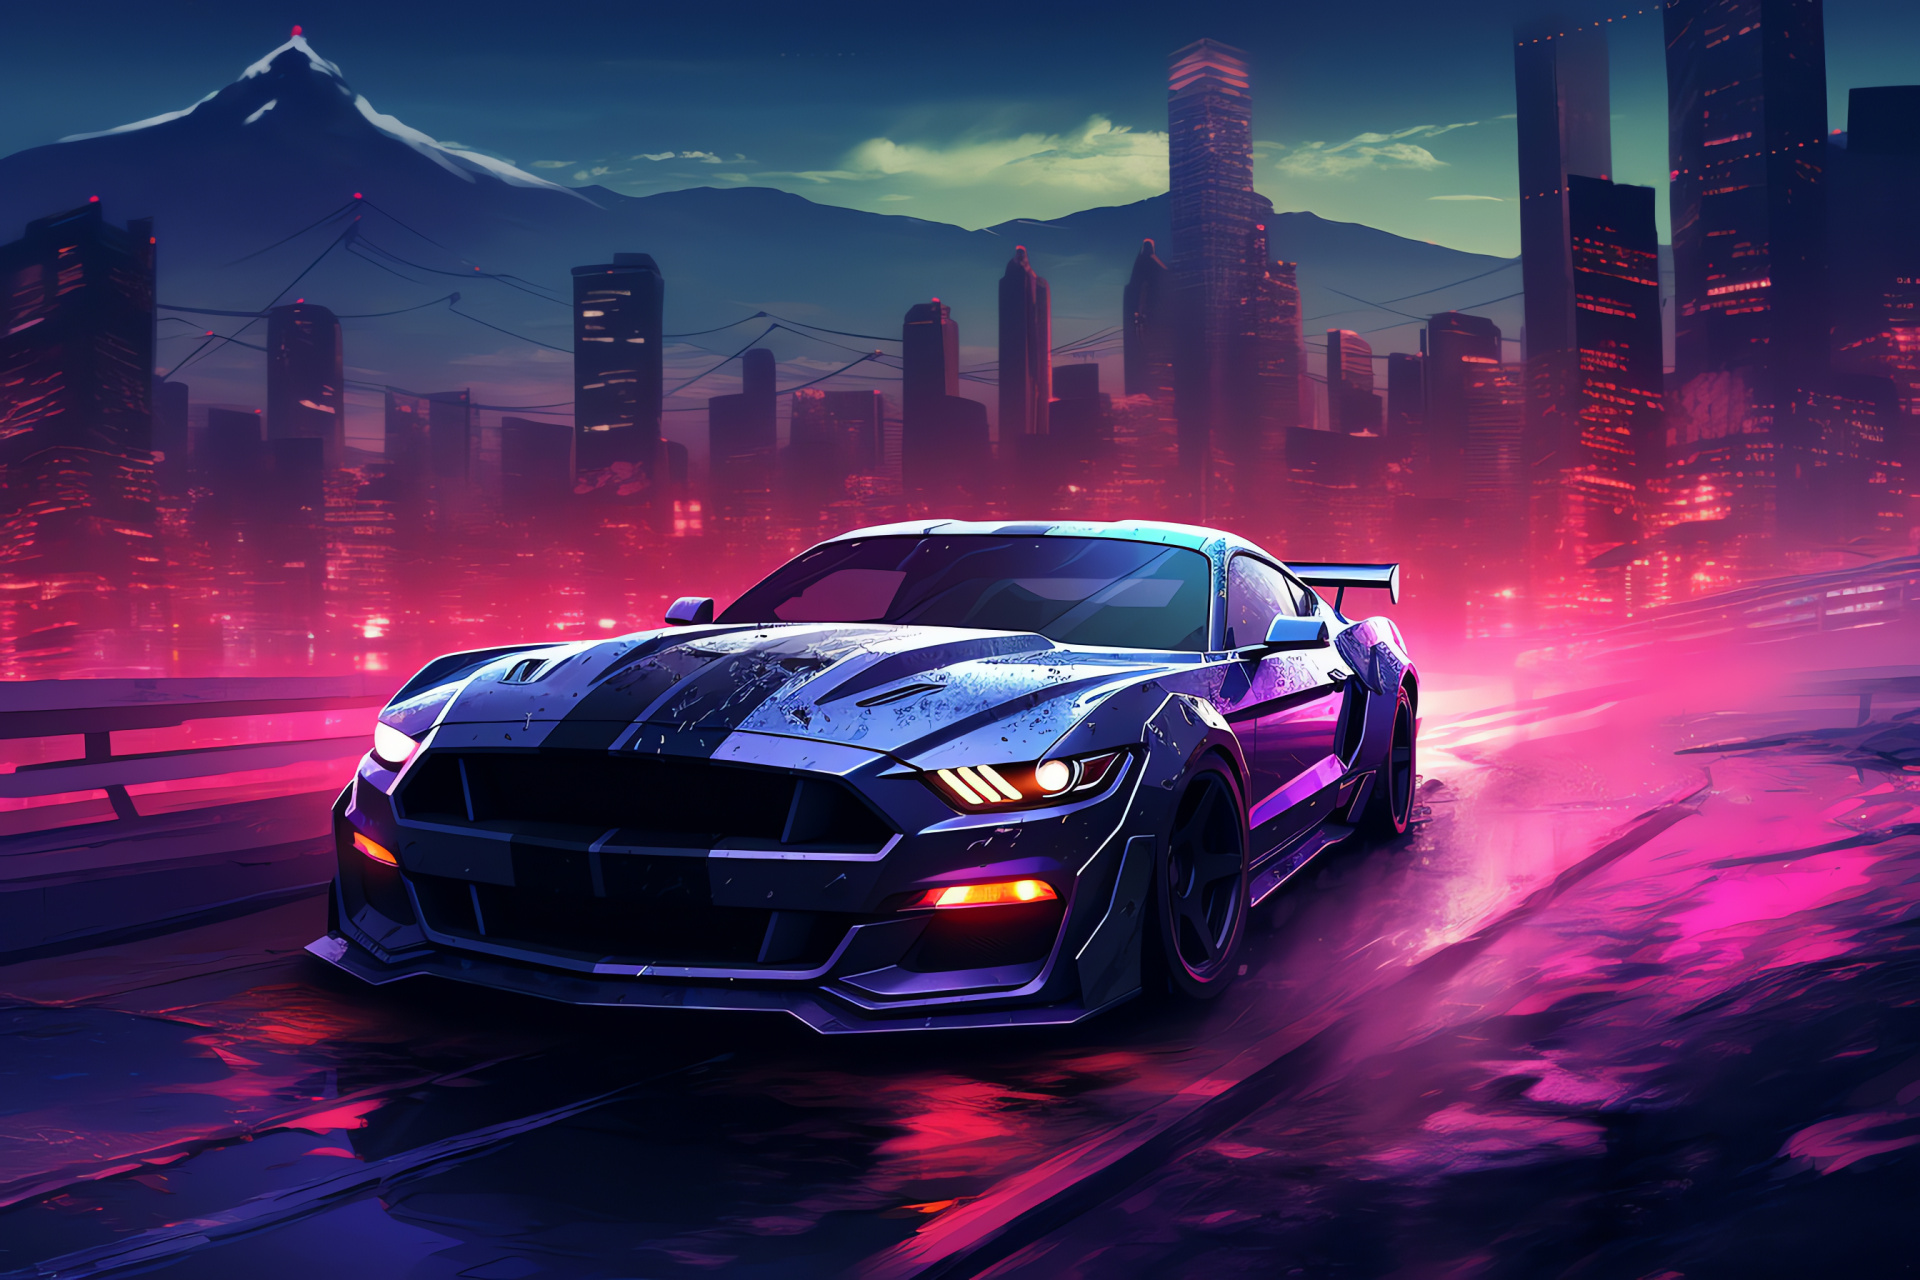 Ford Mustang overview, Cyberpunk cityscape, Neon-lit Mustang drive, Bird-eye urban scene, Digital age car, HD Desktop Wallpaper